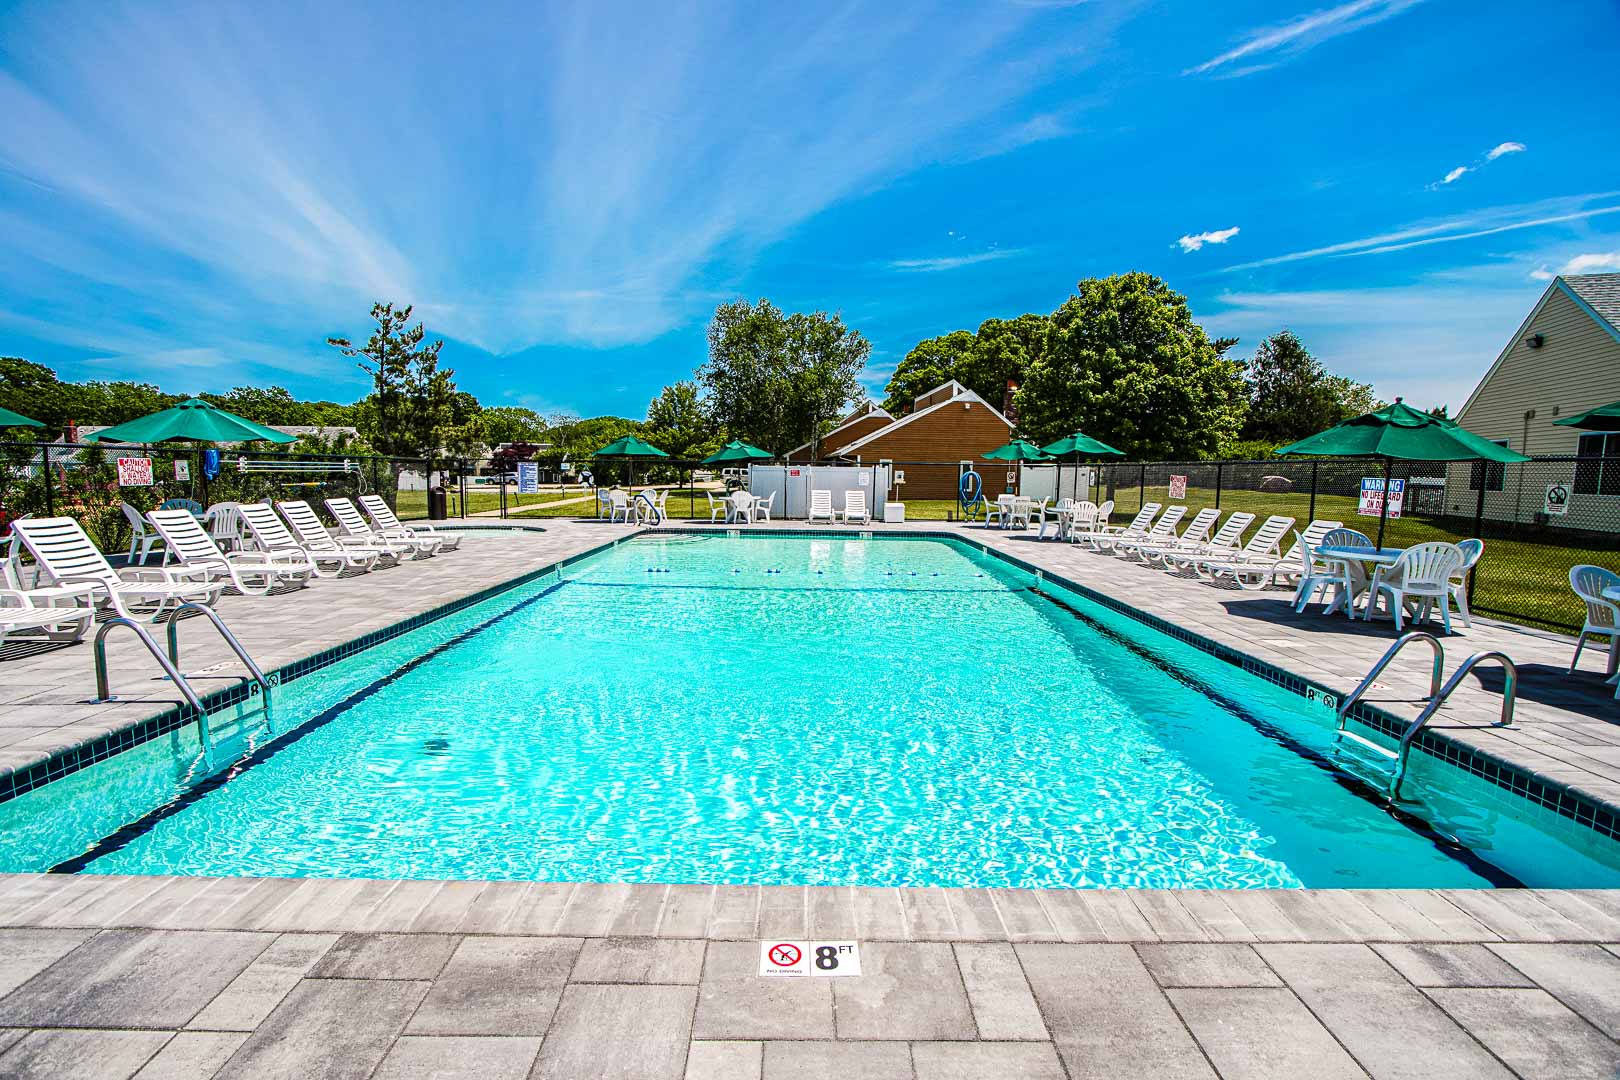 A crisp outdoor swimming pool at VRI's Brewster Green Resort in Massachusetts.